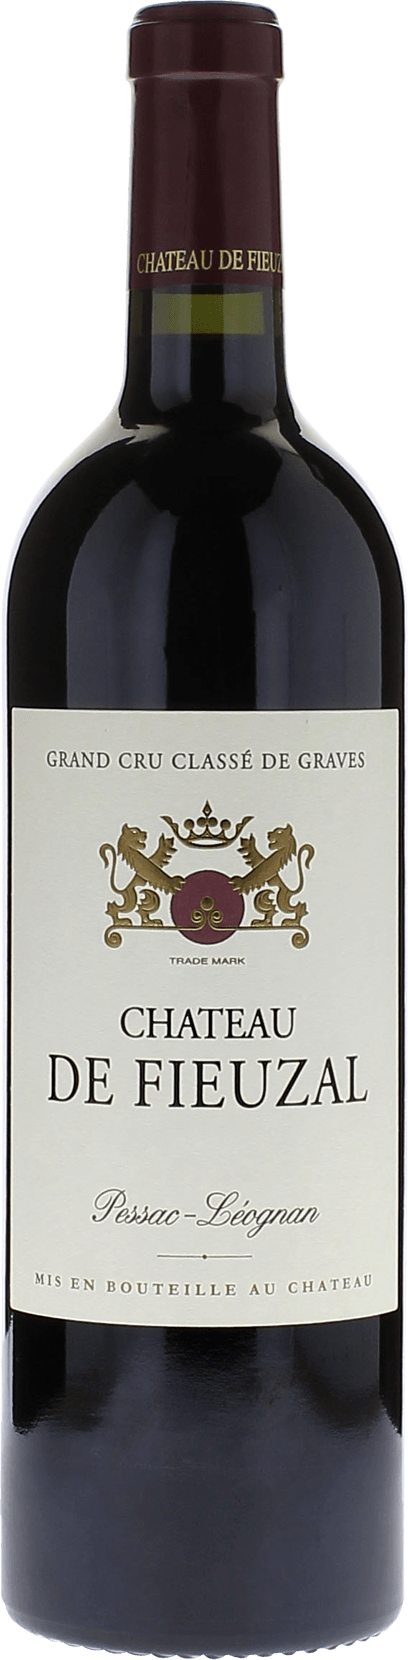 Fieuzal rouge 1996 cru class Pessac-Lognan, Bordeaux rouge